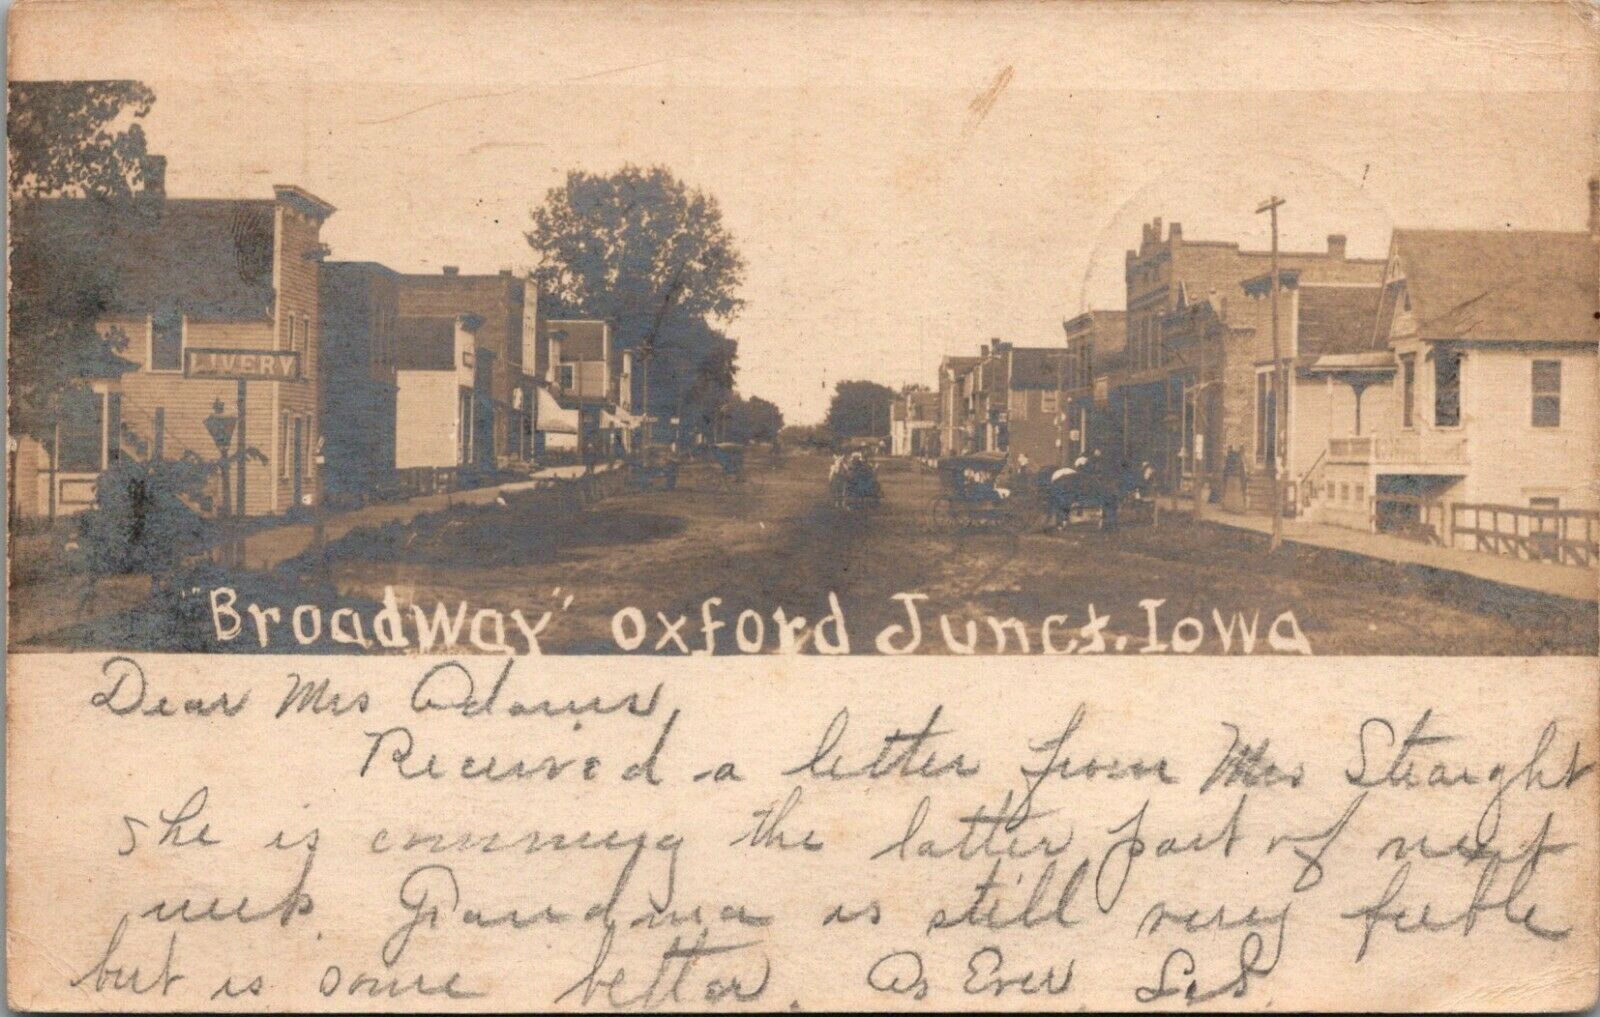 Broadway, Oxford Junction, Iowa